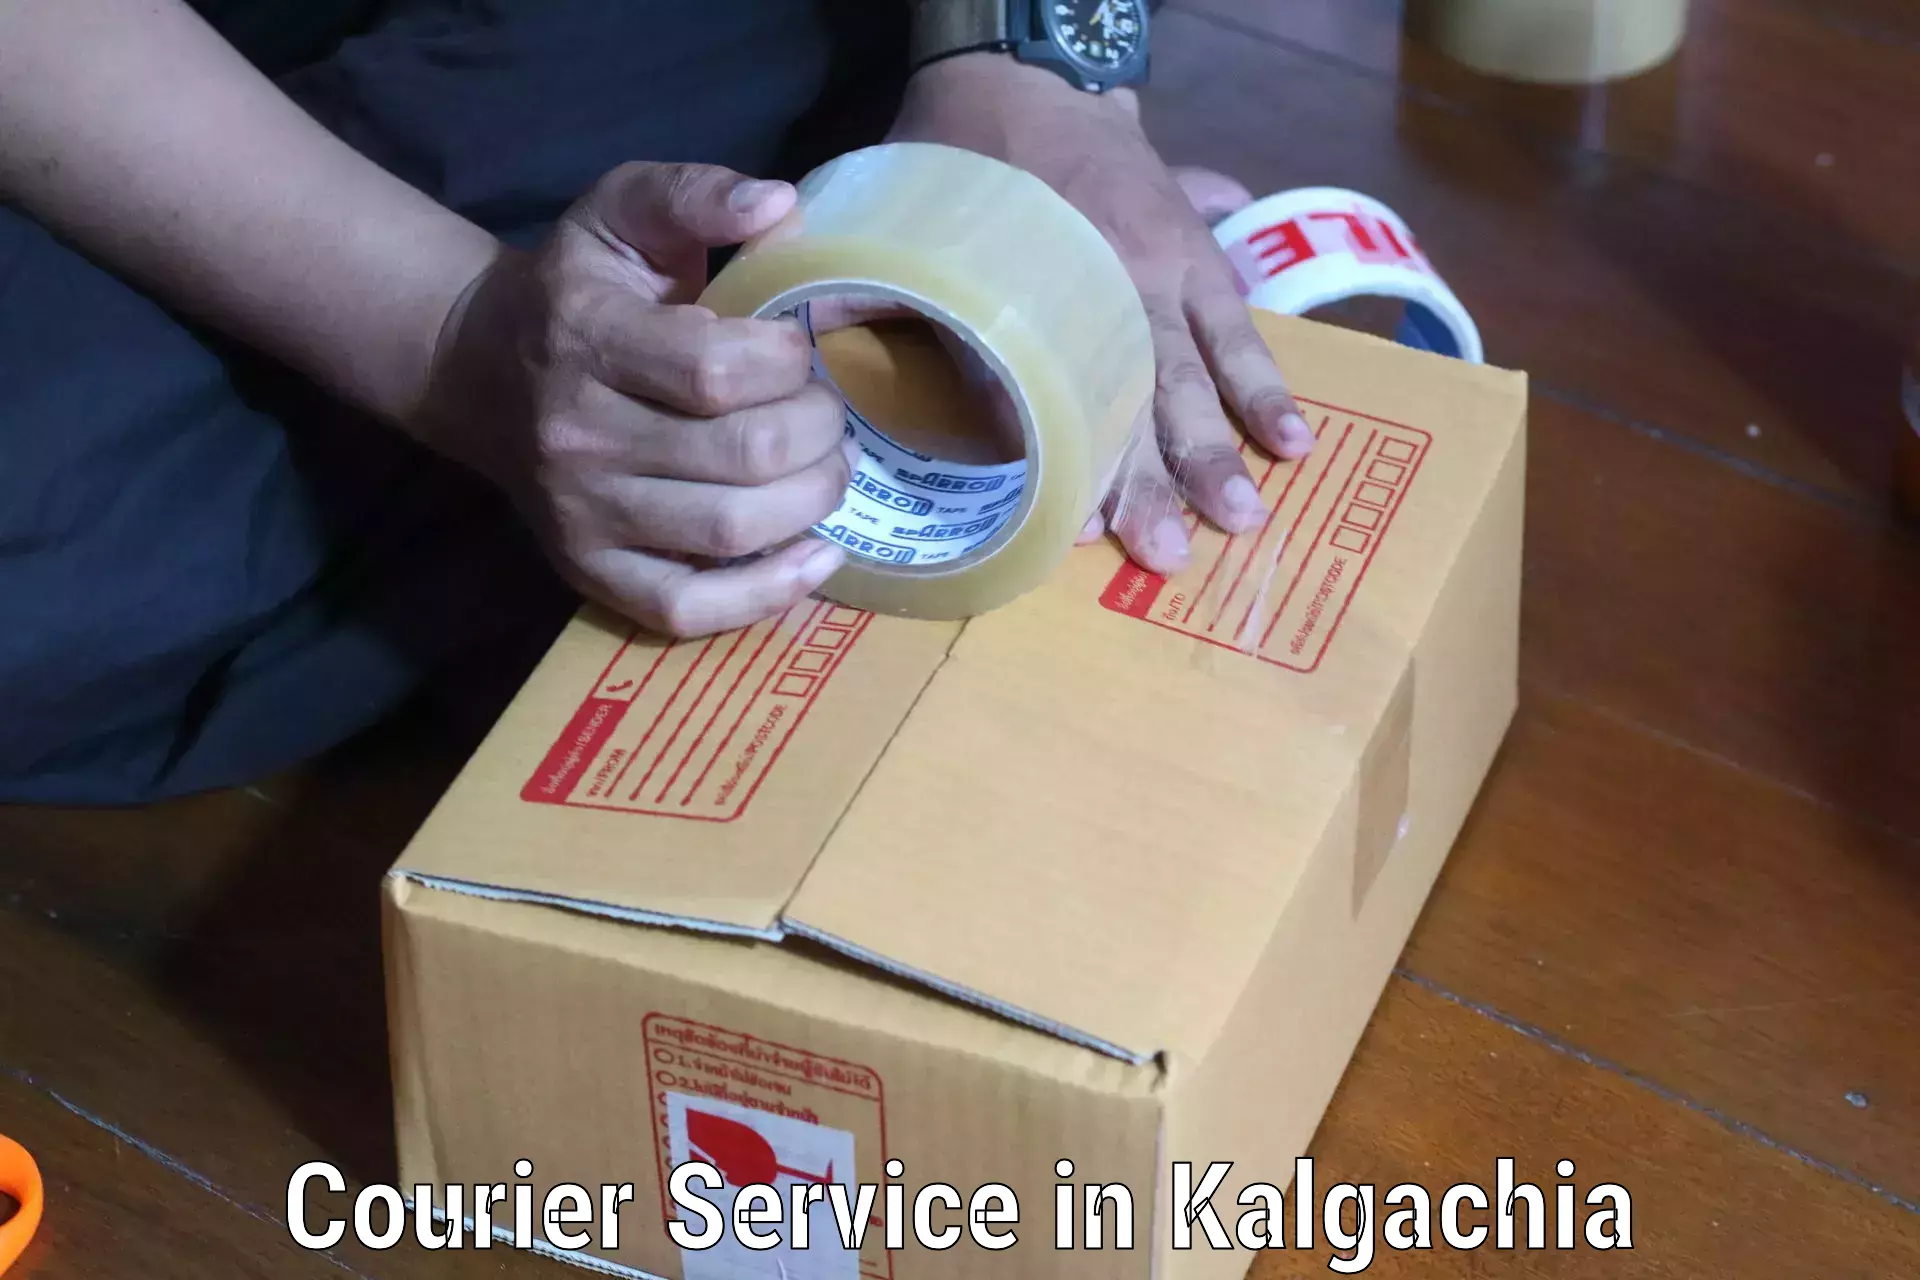 Customer-oriented courier services in Kalgachia